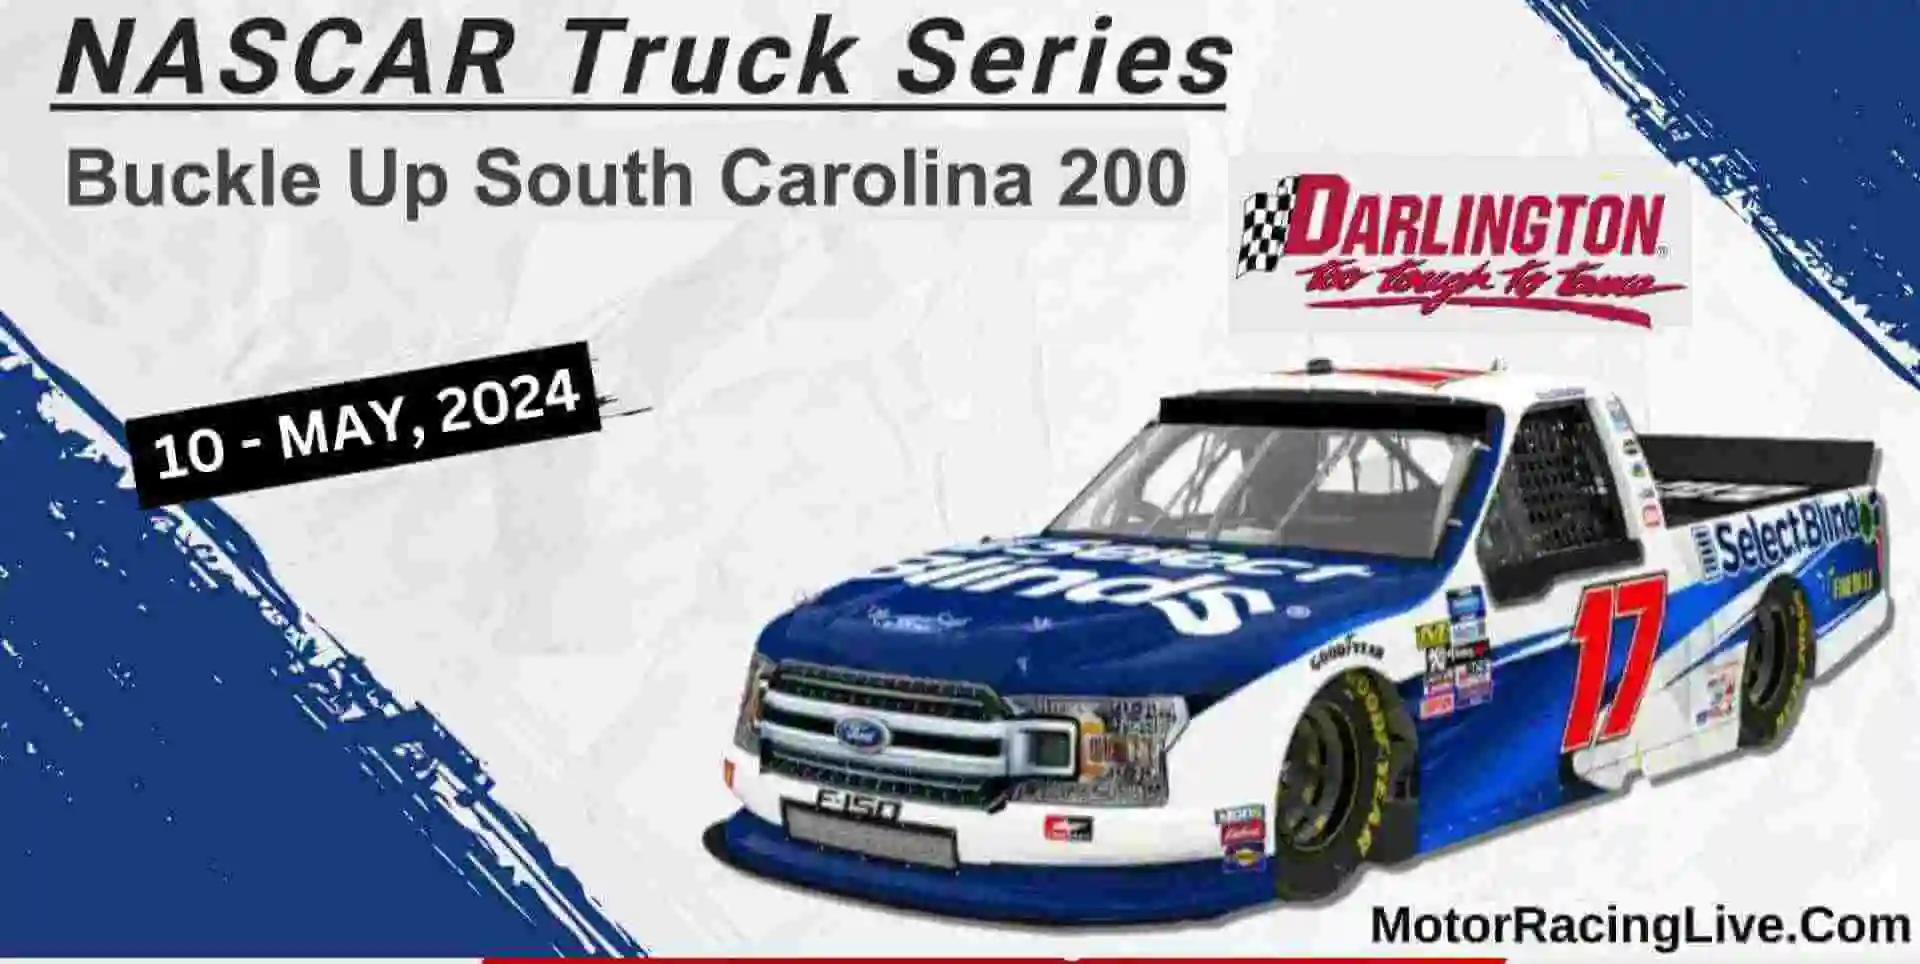 Buckle Up South Carolina 200 Live Stream 2024 | NASCAR Truck Series slider